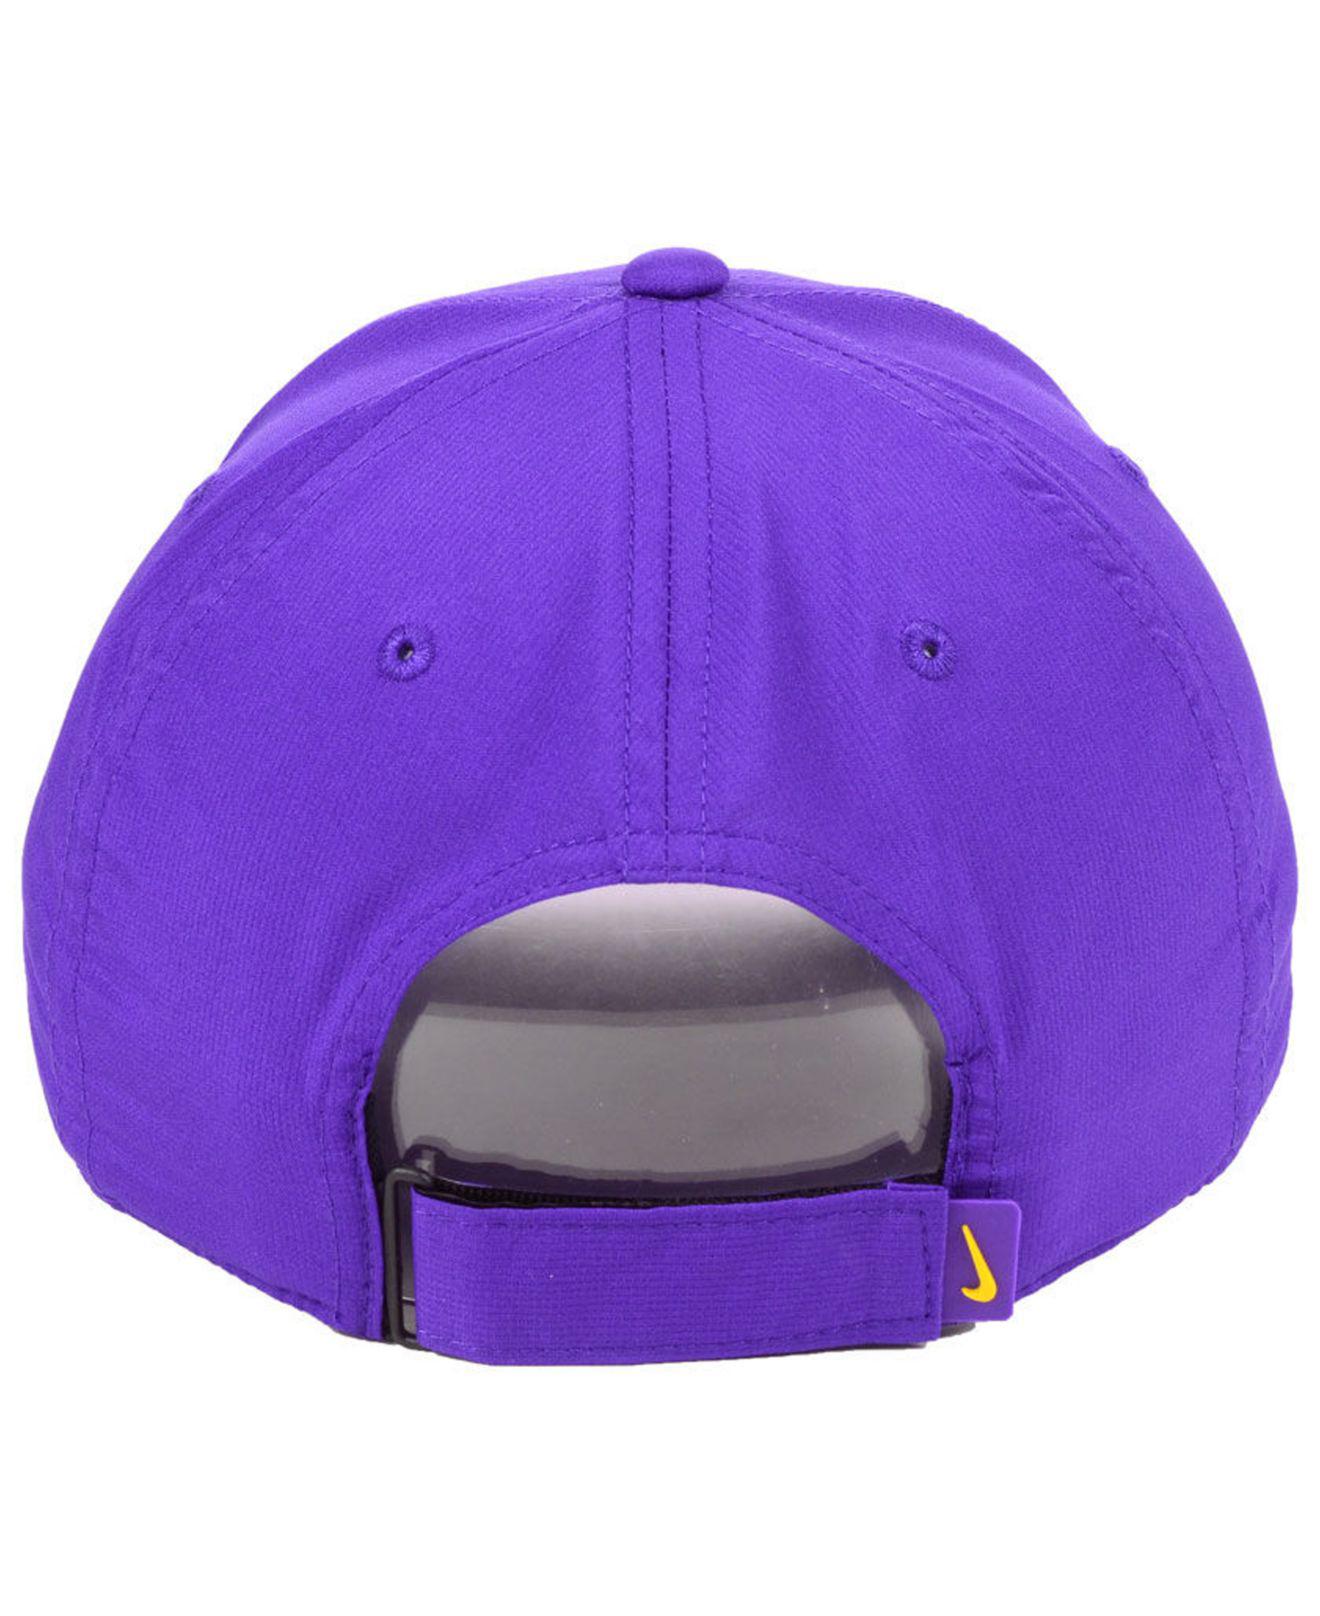 Nike Lsu Tigers Dri-fit Adjustable Cap in Purple for Men | Lyst